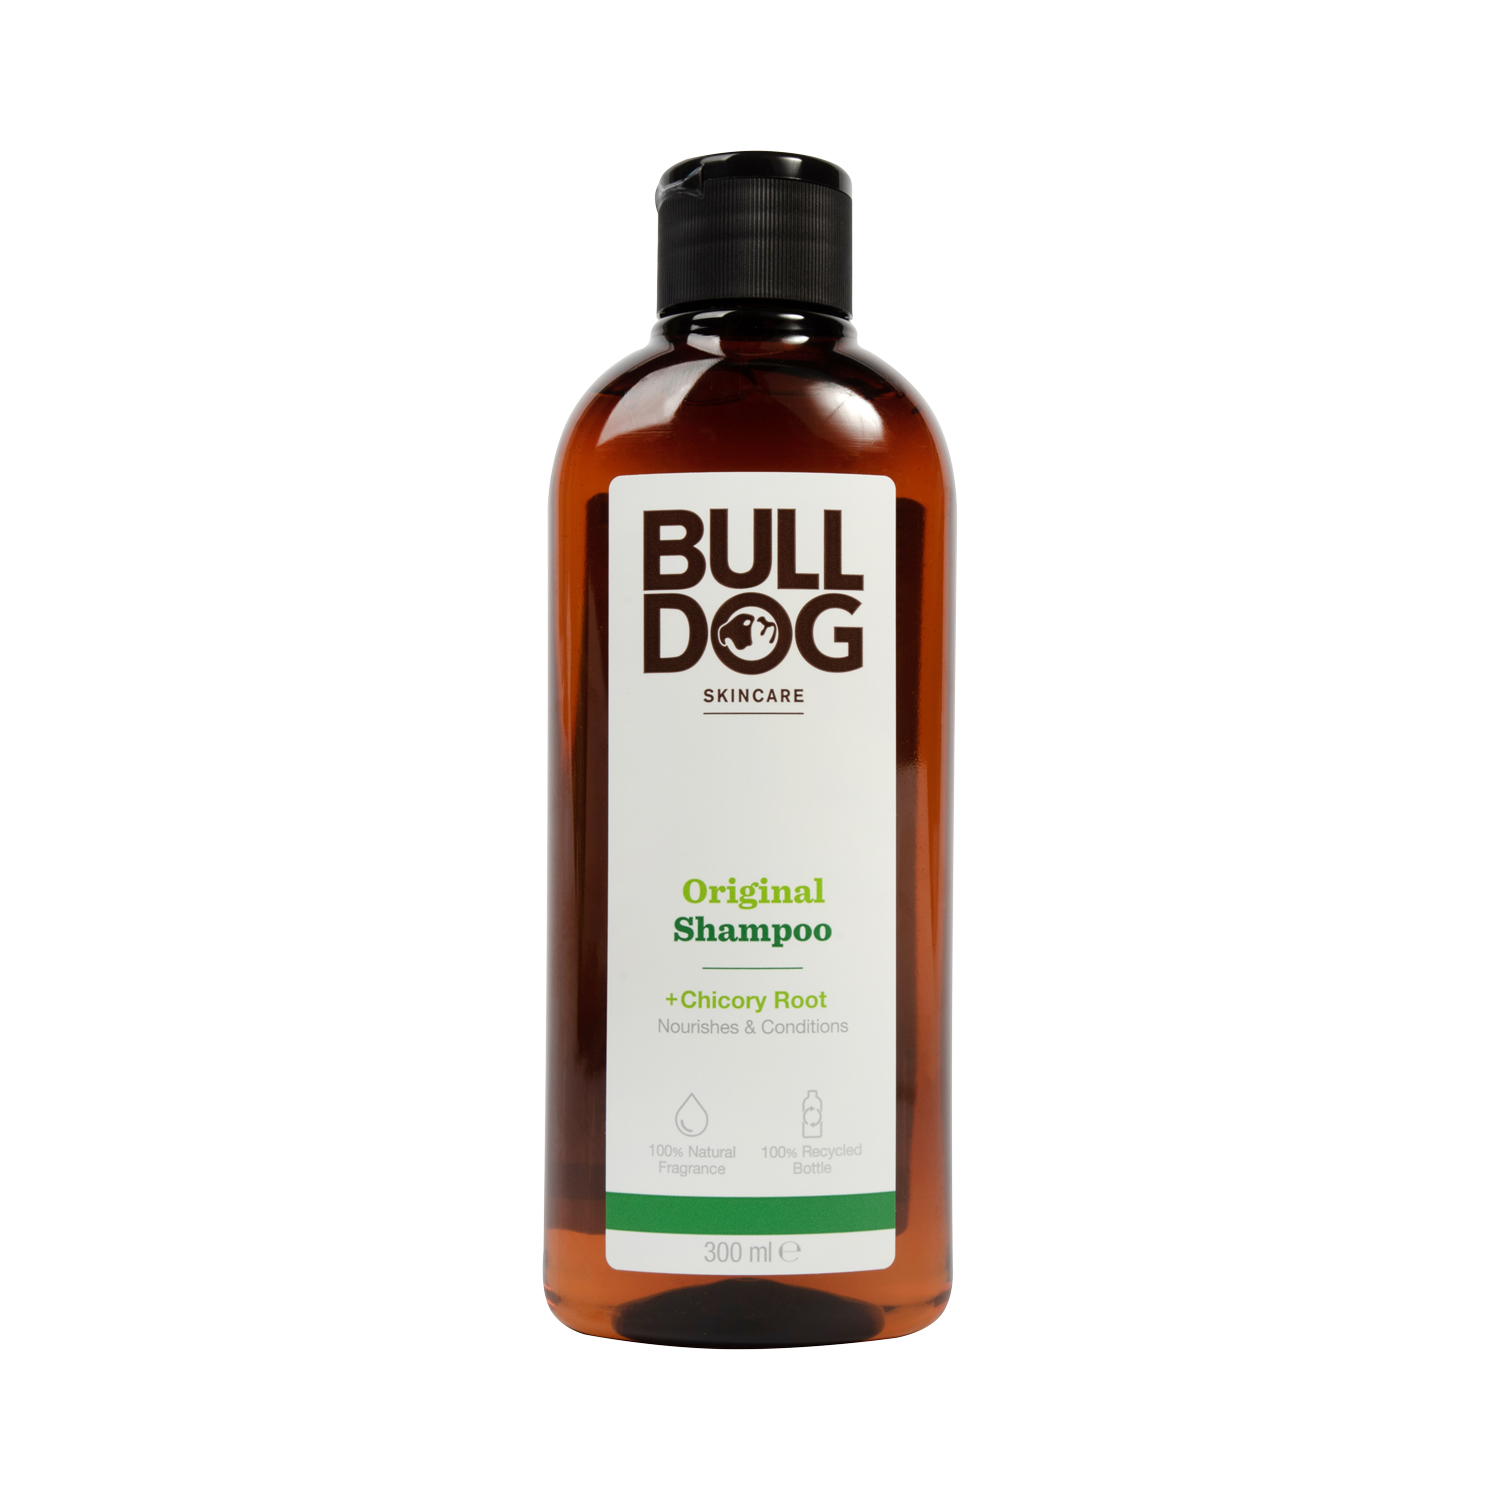 Bulldog - Original Shampoo